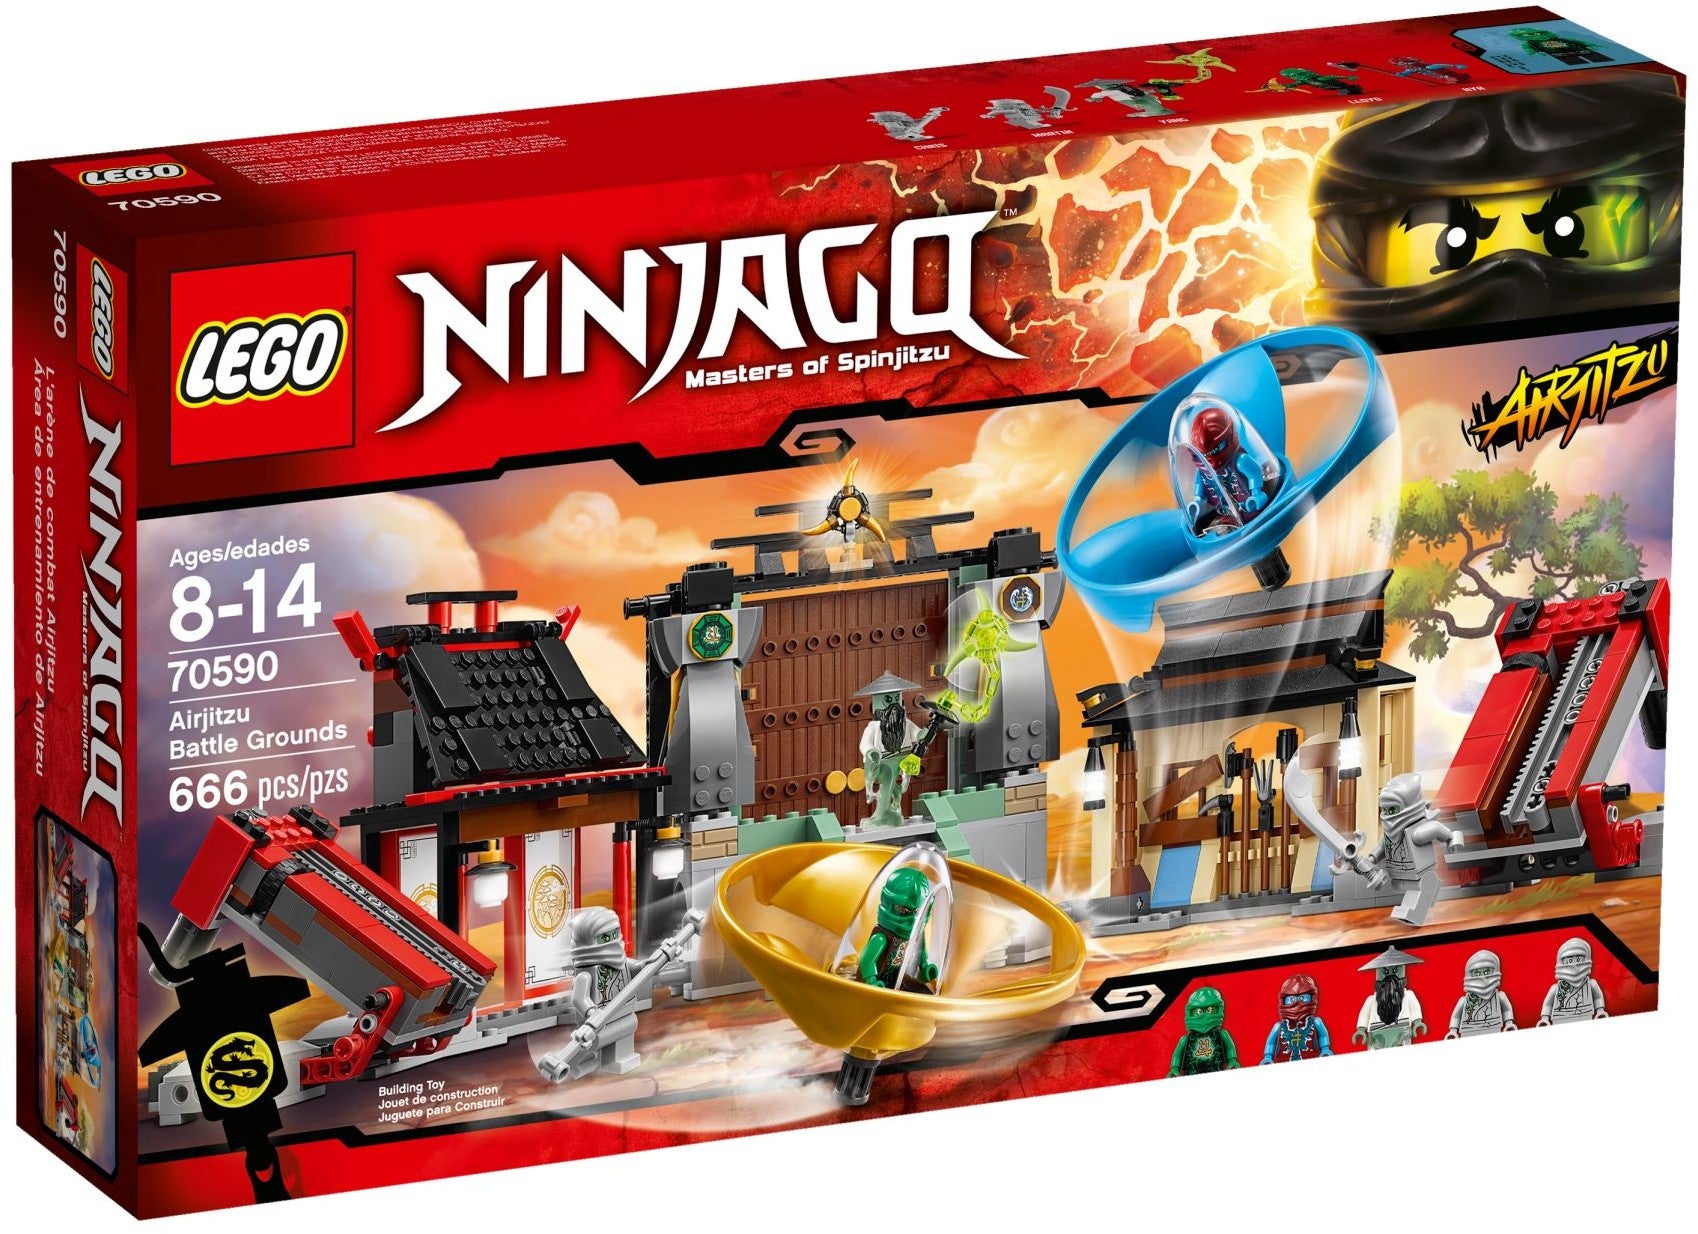 Lego Ninjago 70590 - Airjitzu Battle Grounds